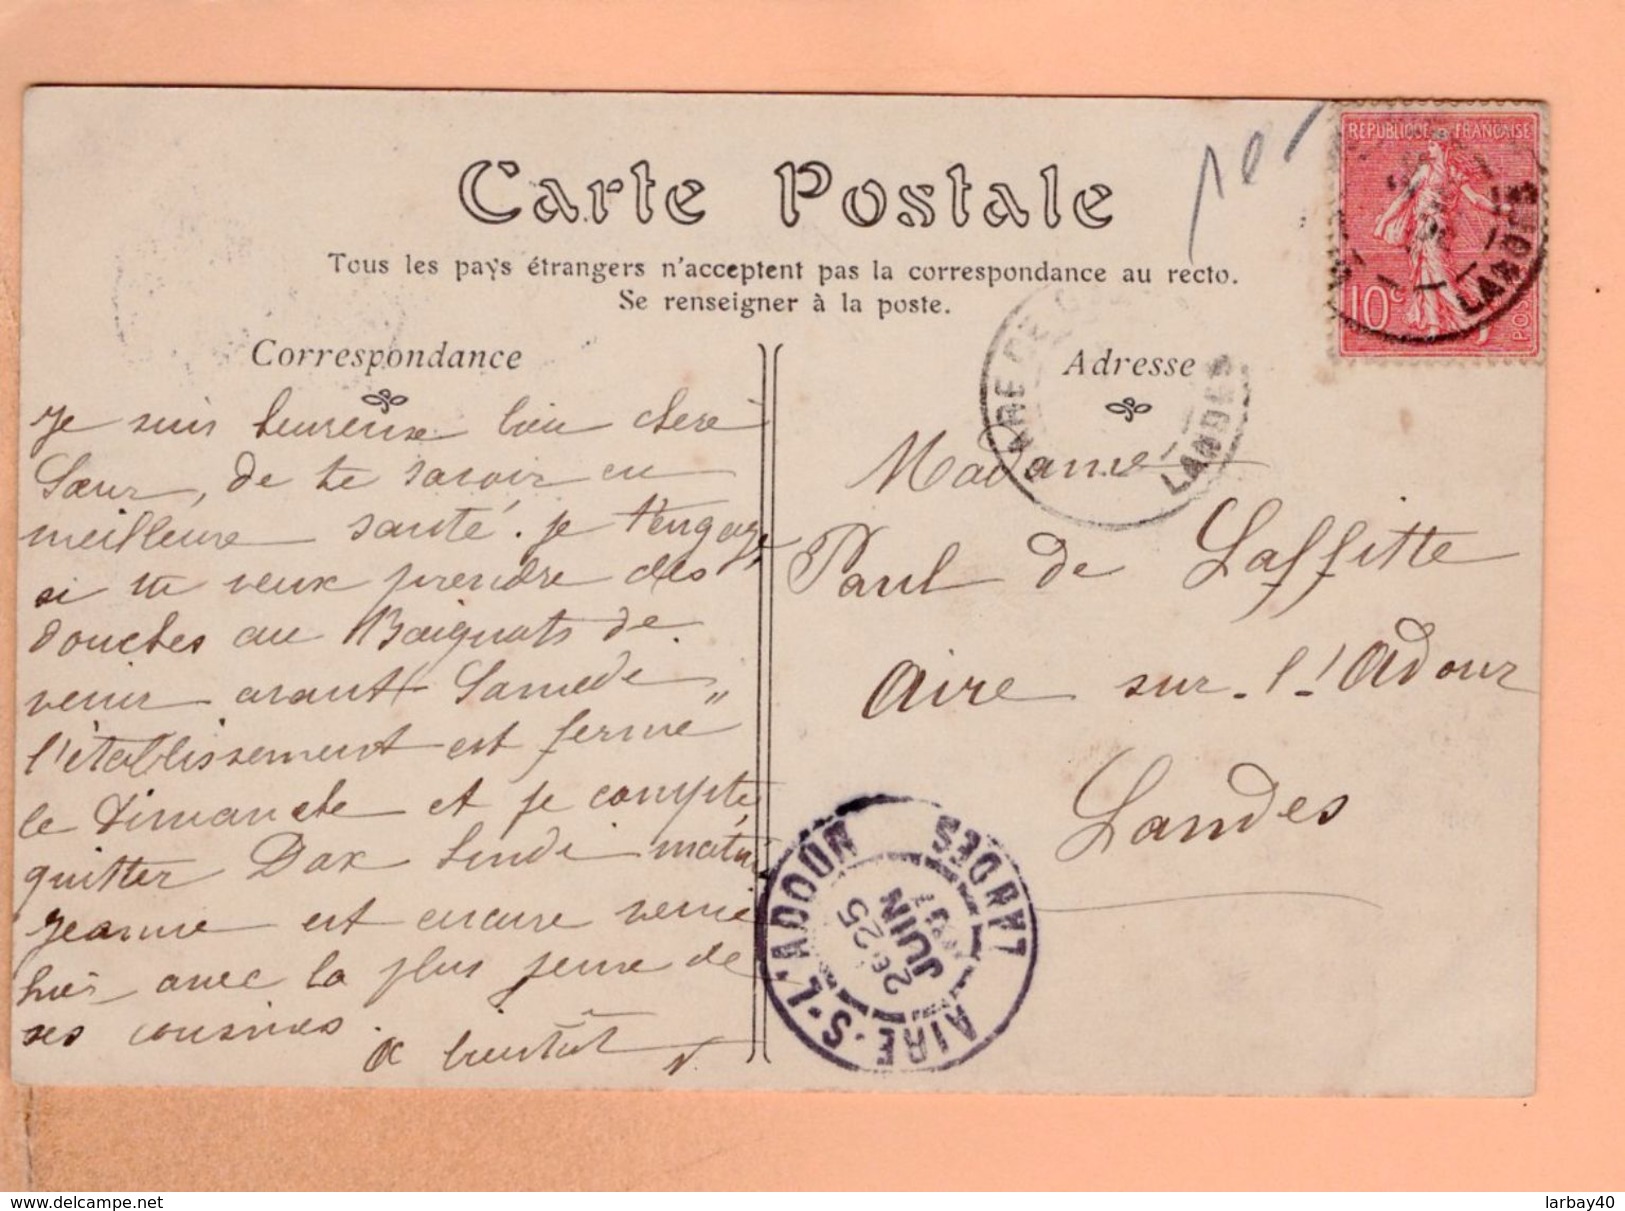 Cpa Cartes Postales Ancienne - Dax Pont Du Chemin De Fer 22 Train - Dax